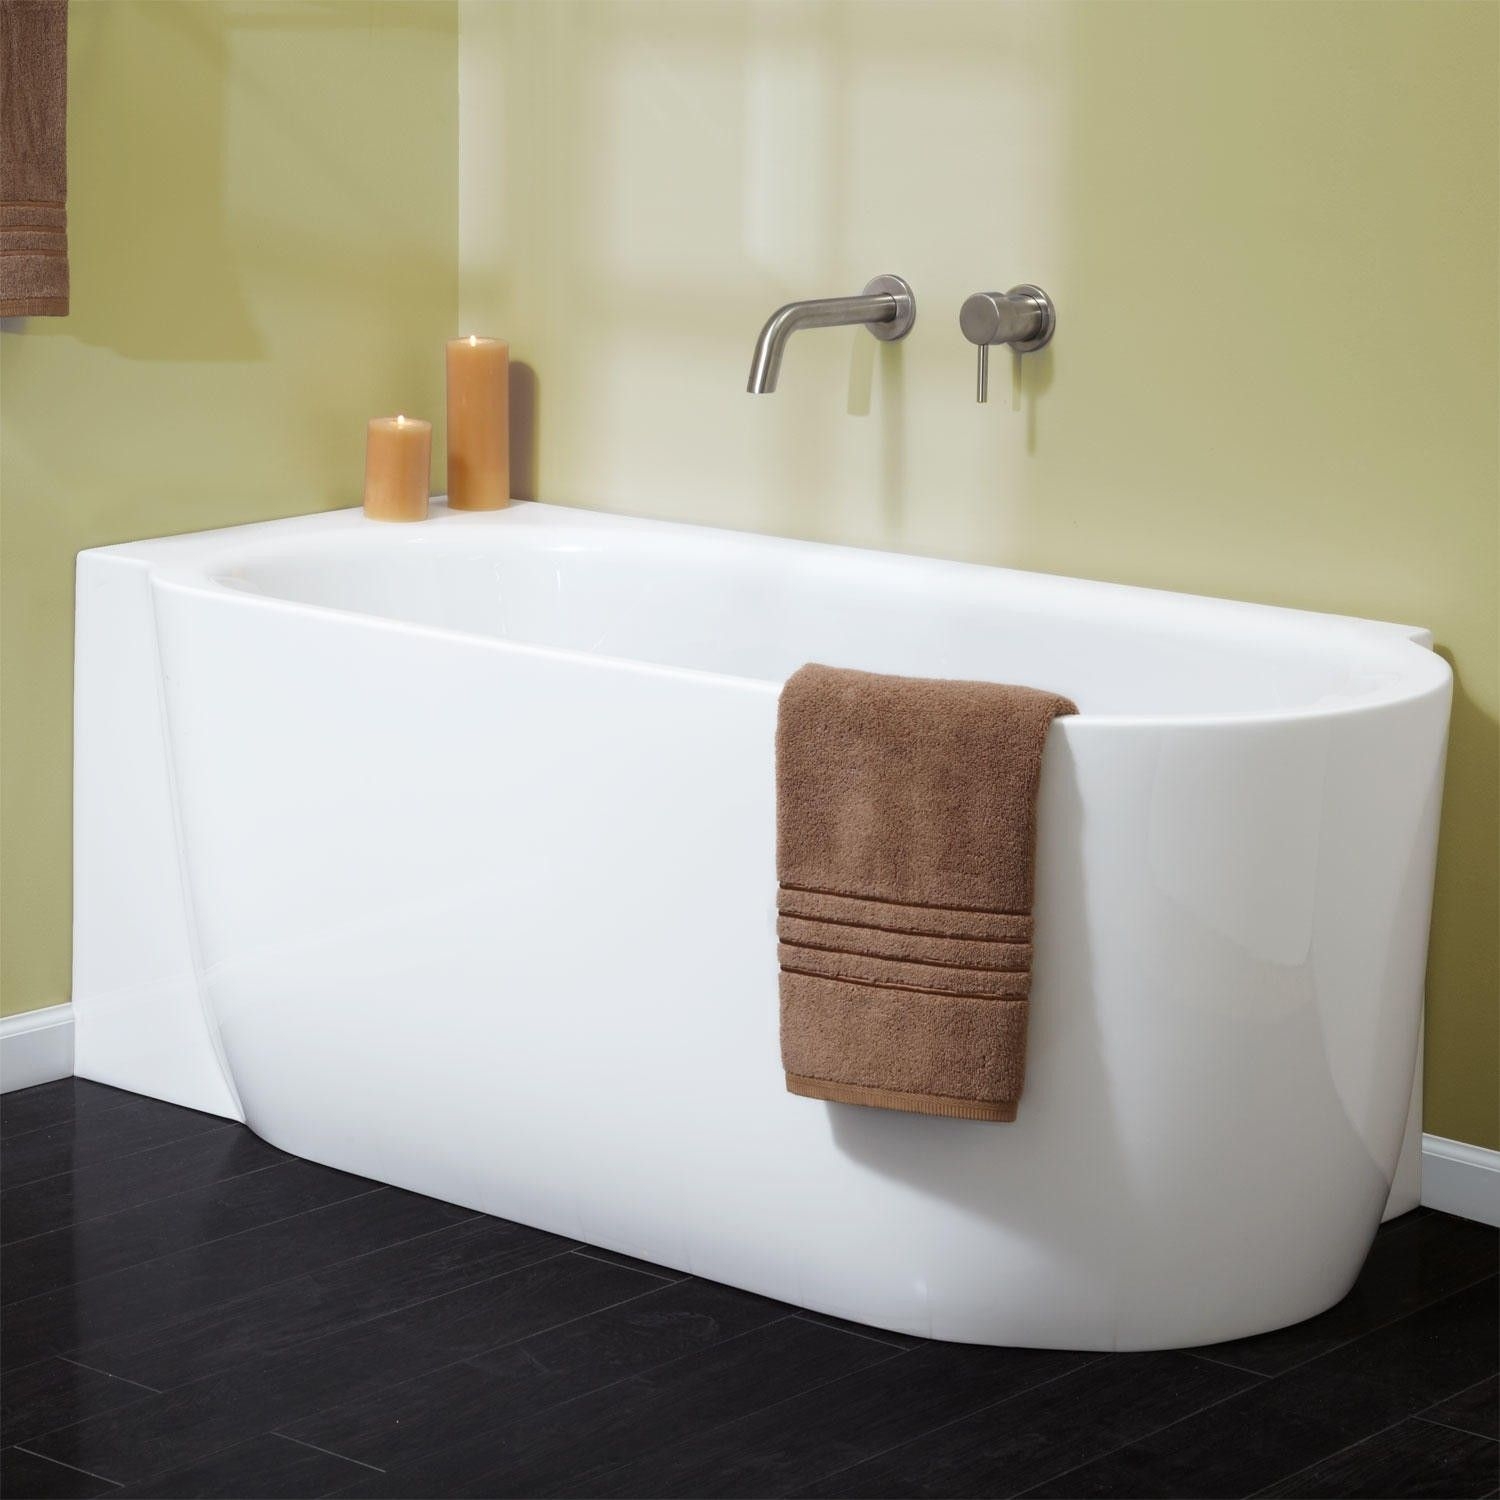 Averill acrylic freestanding corner tub 1